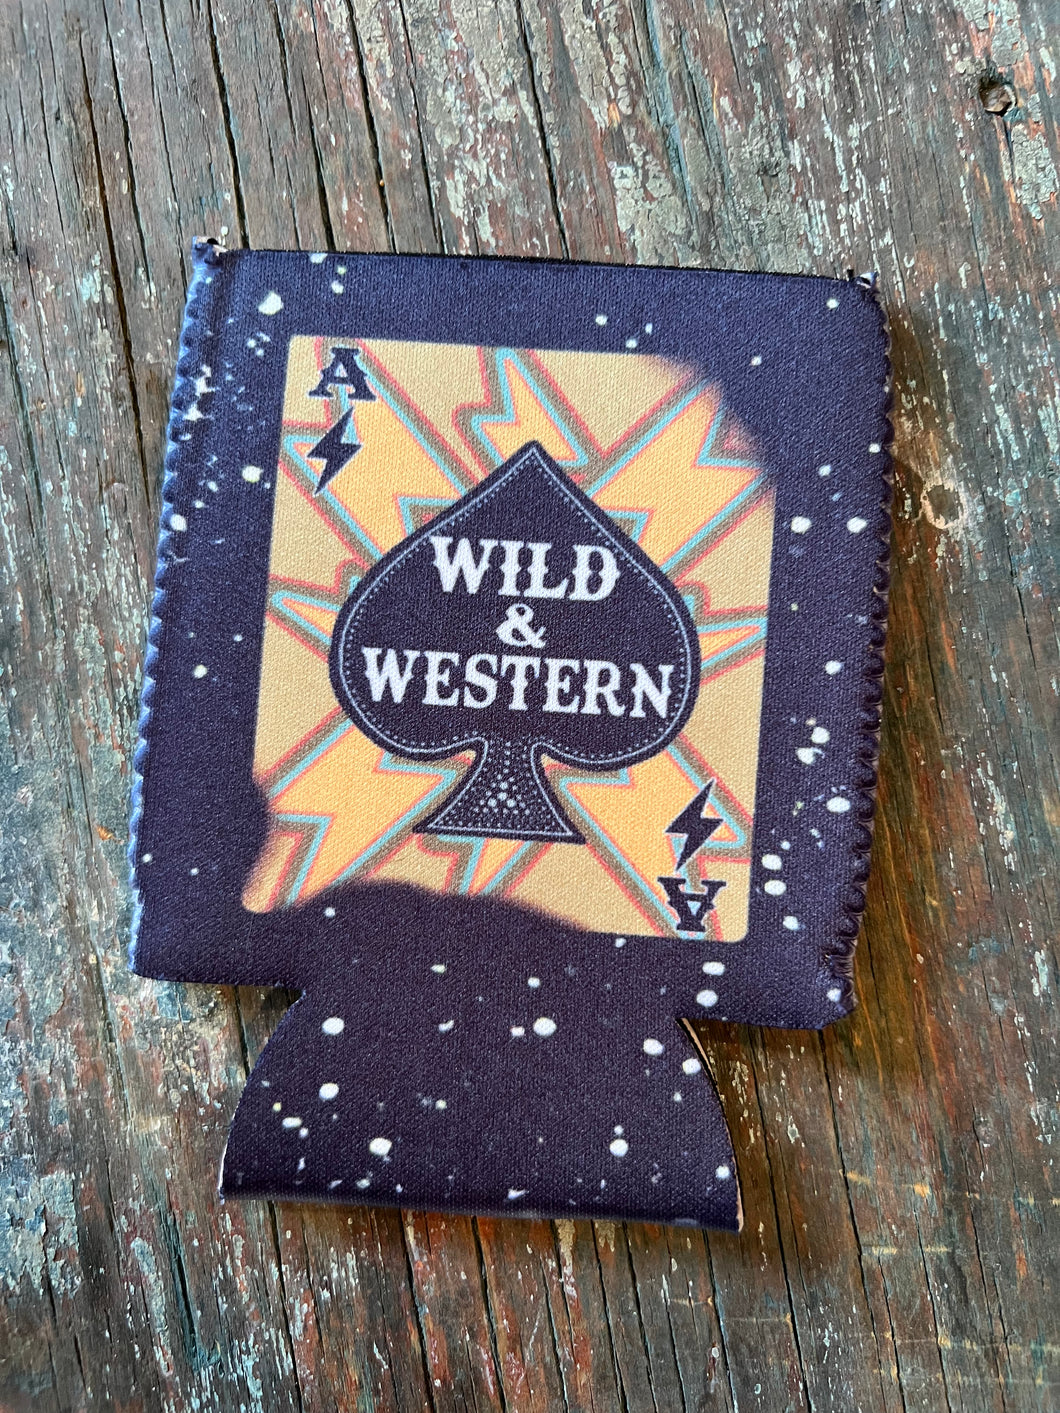 Wild & western reg drink sleeve